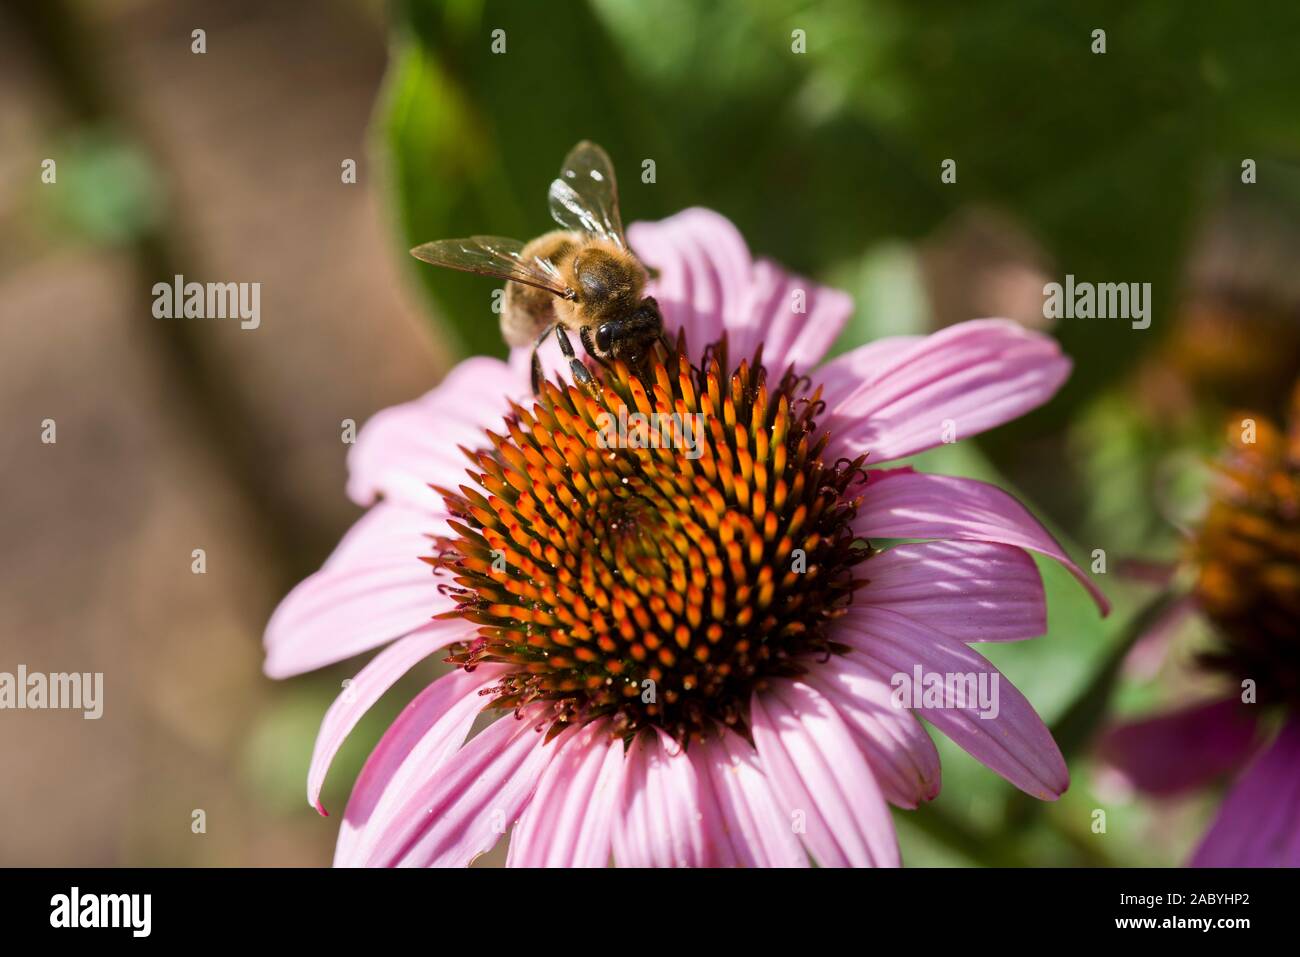 A worker bee feeding on an Echinacea flower head Stock Photo